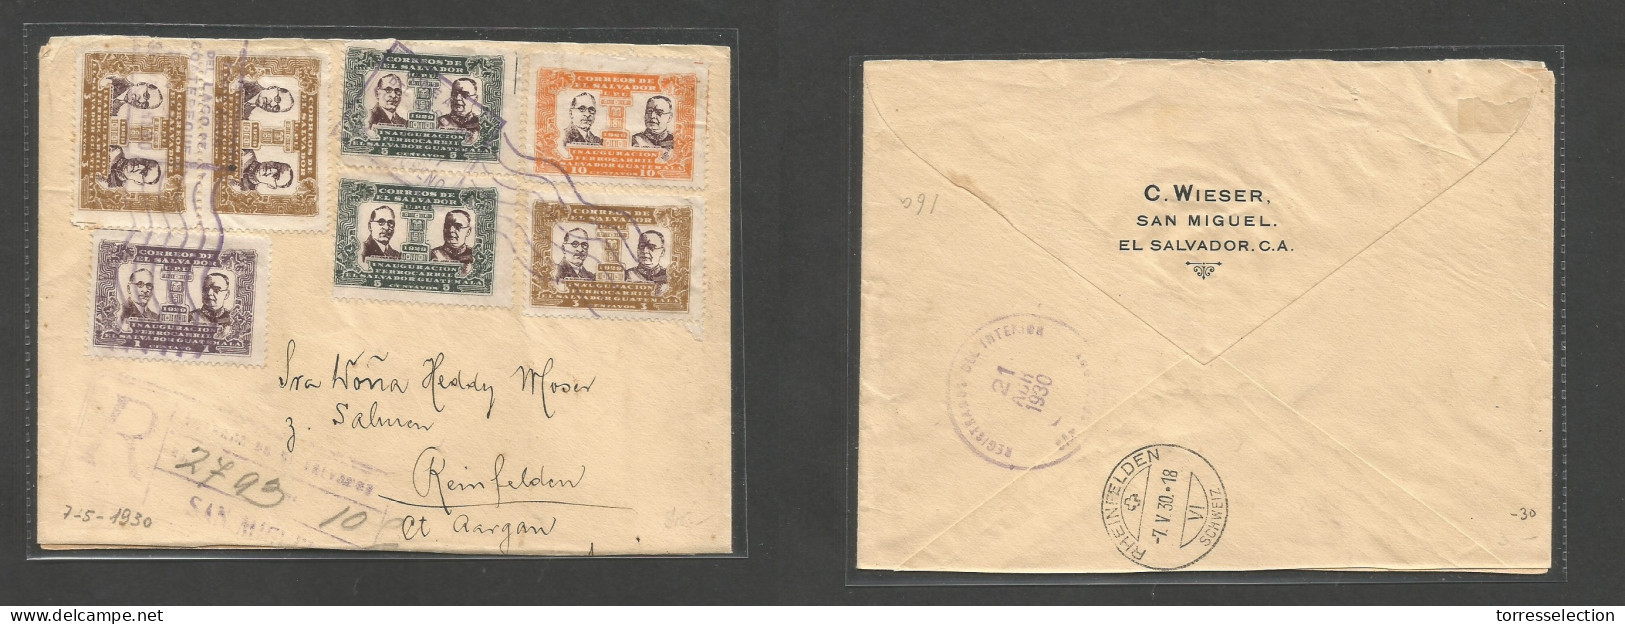 SALVADOR, EL. 1930 (21 April) San Miguel - Switzerland, Reinfelden (7 May) Registered Multifkd Comm Issue. Railway Inaug - Salvador